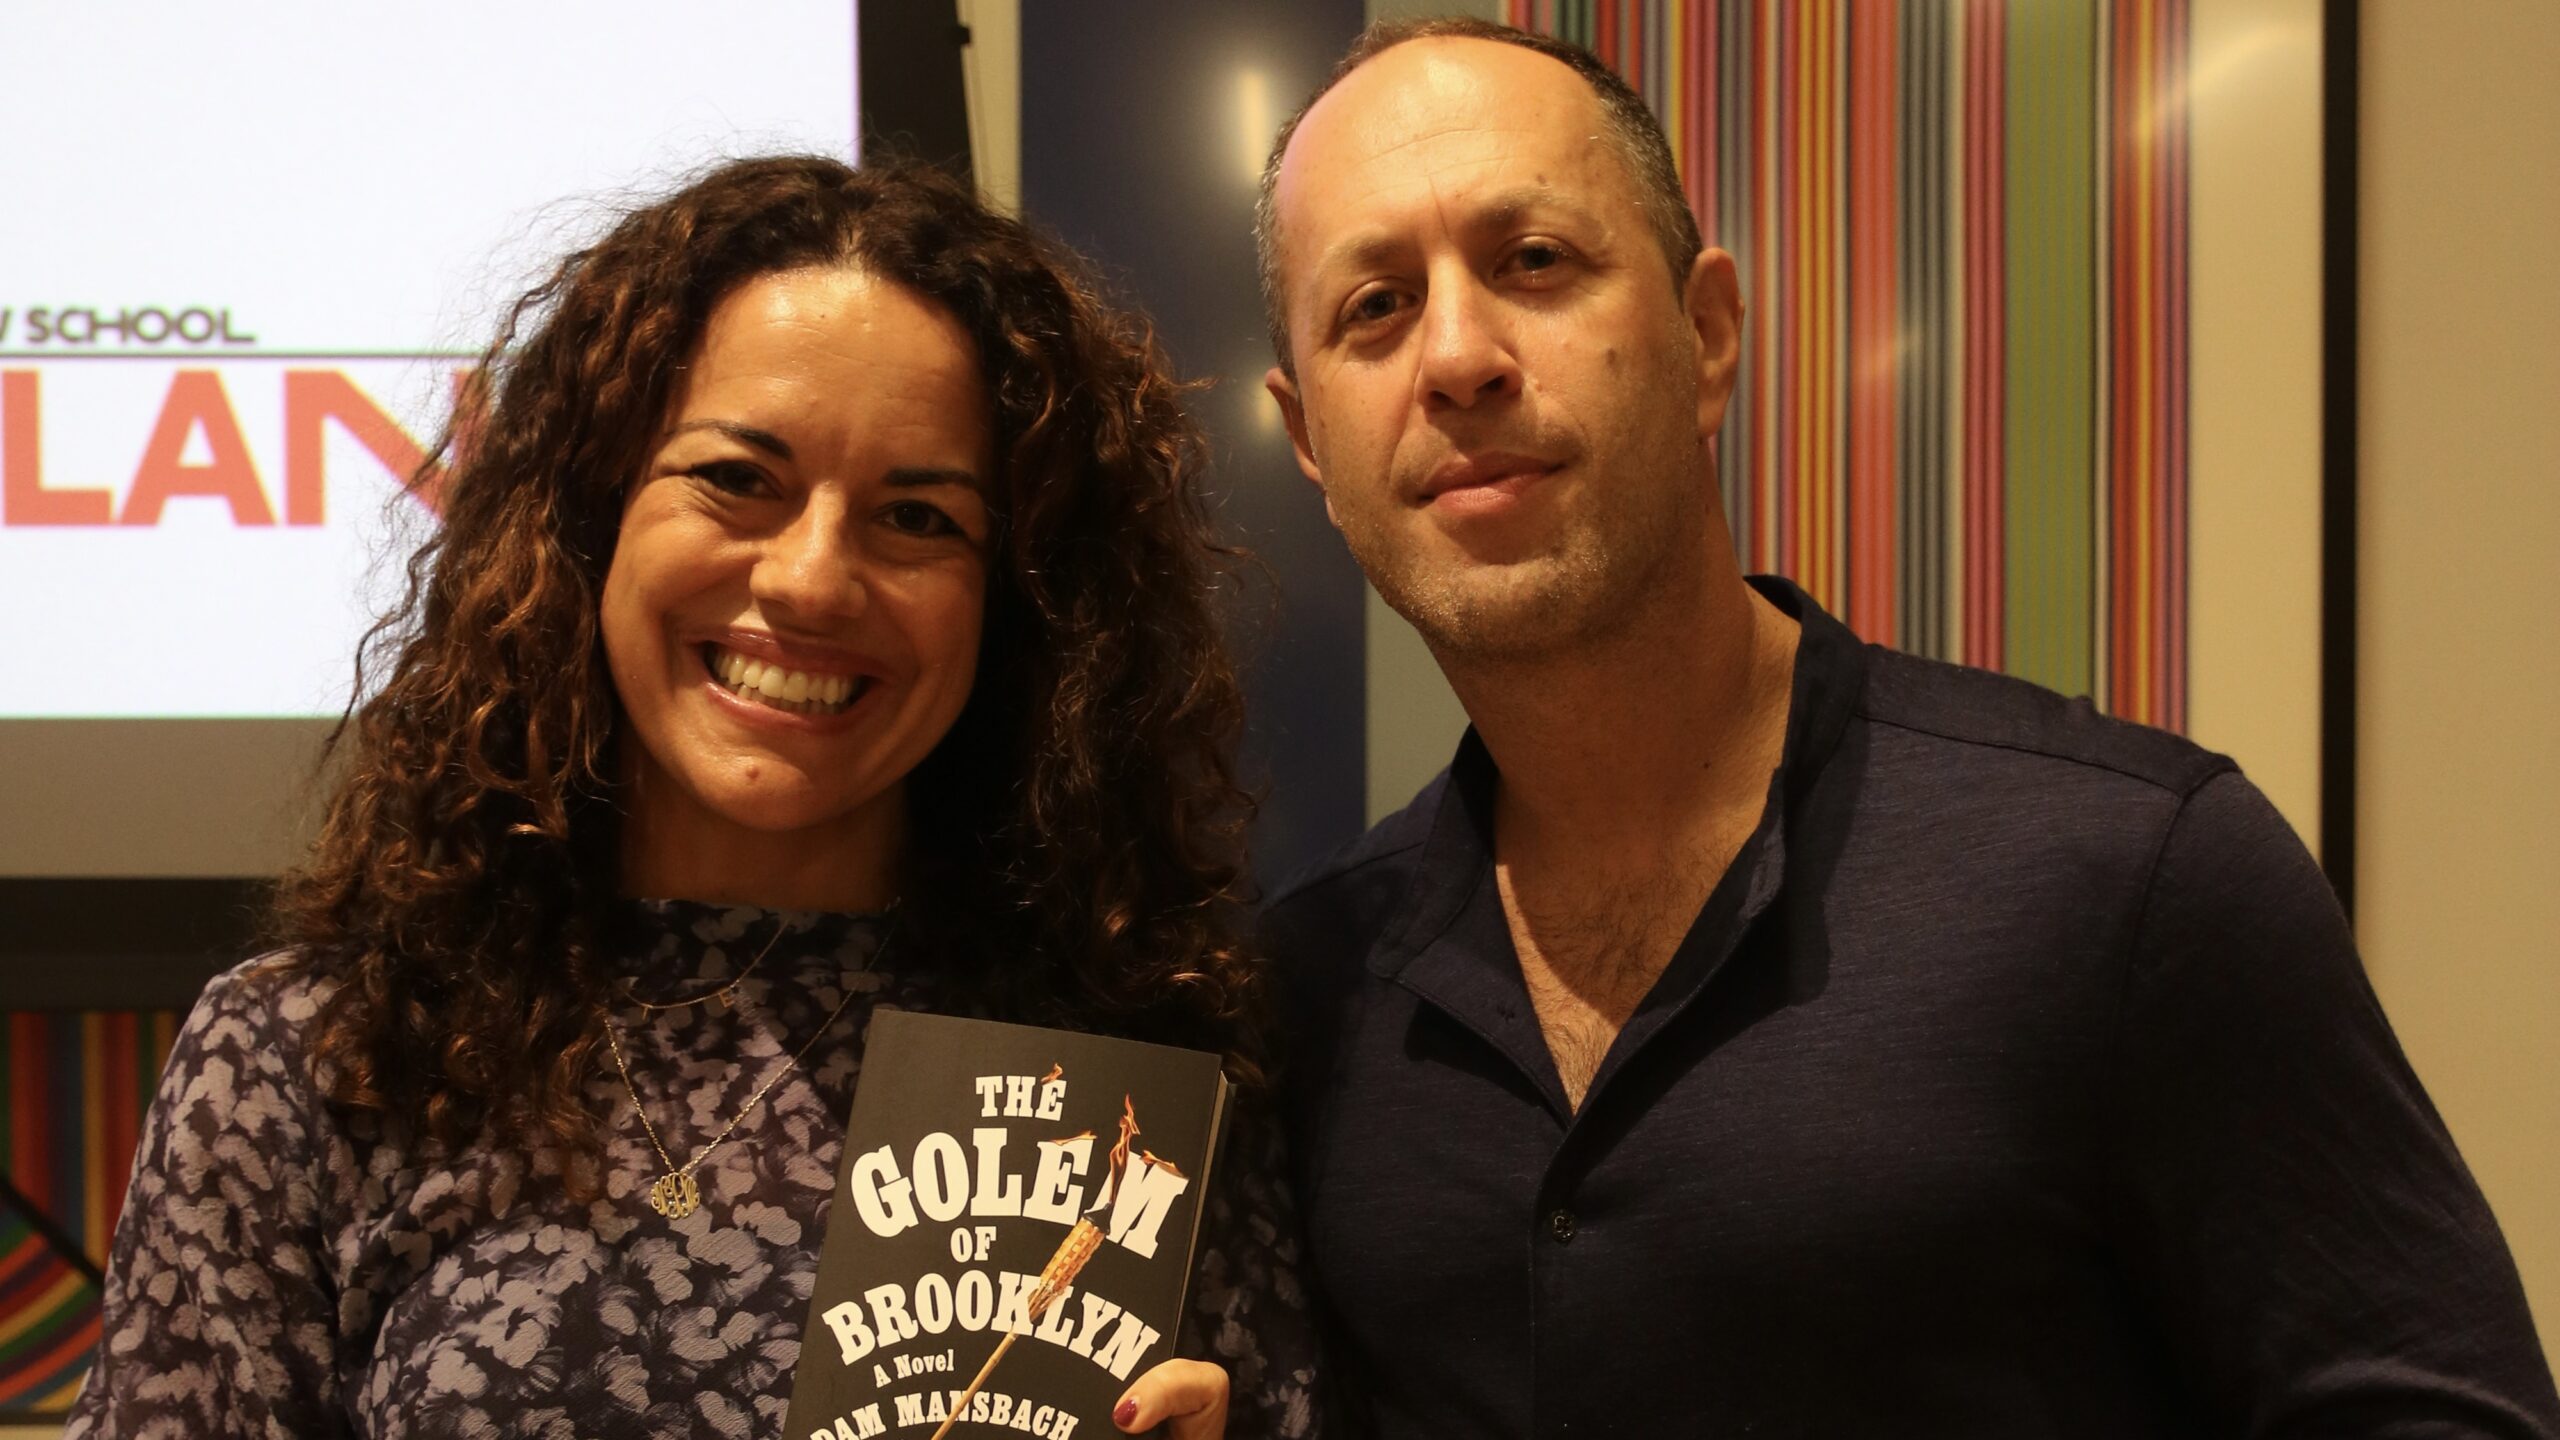 Adam Mansbach and Natalia Mehlman Petrzela with a copy of “The Golem of Brooklyn.”